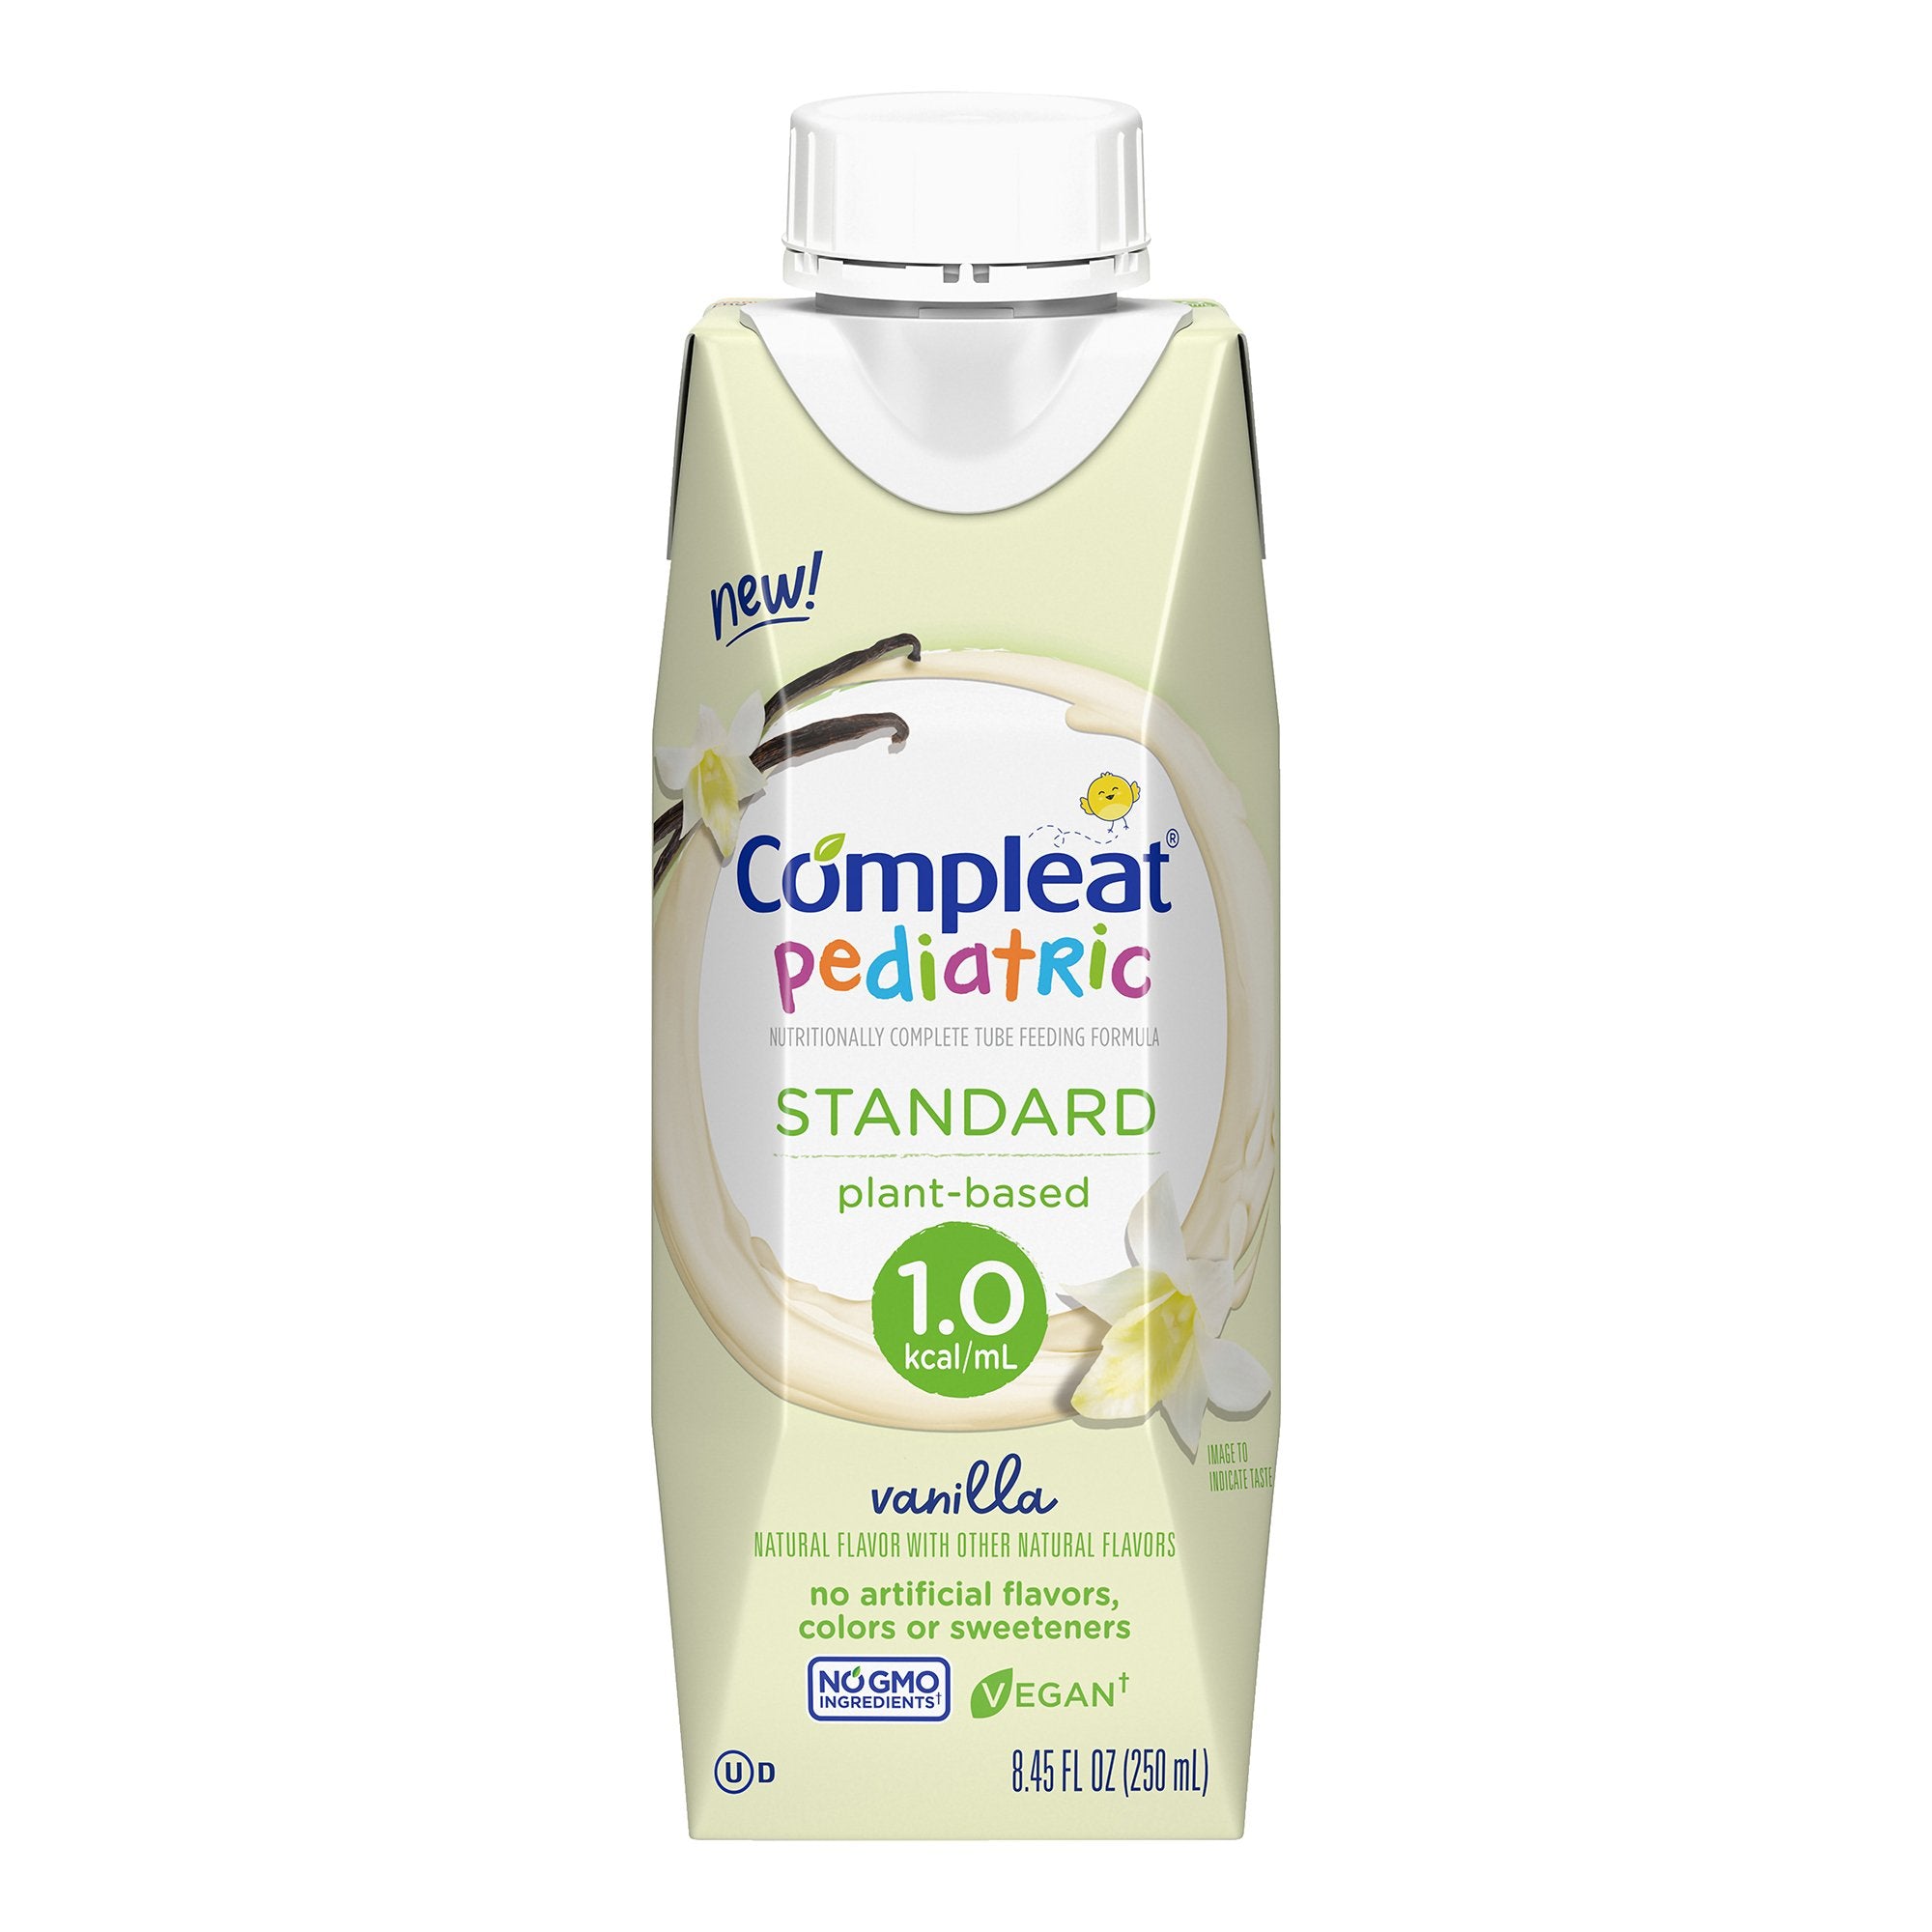 Compleat® Pediatric Standard 1.0 Cal Vanilla Oral Supplement (24 Units)